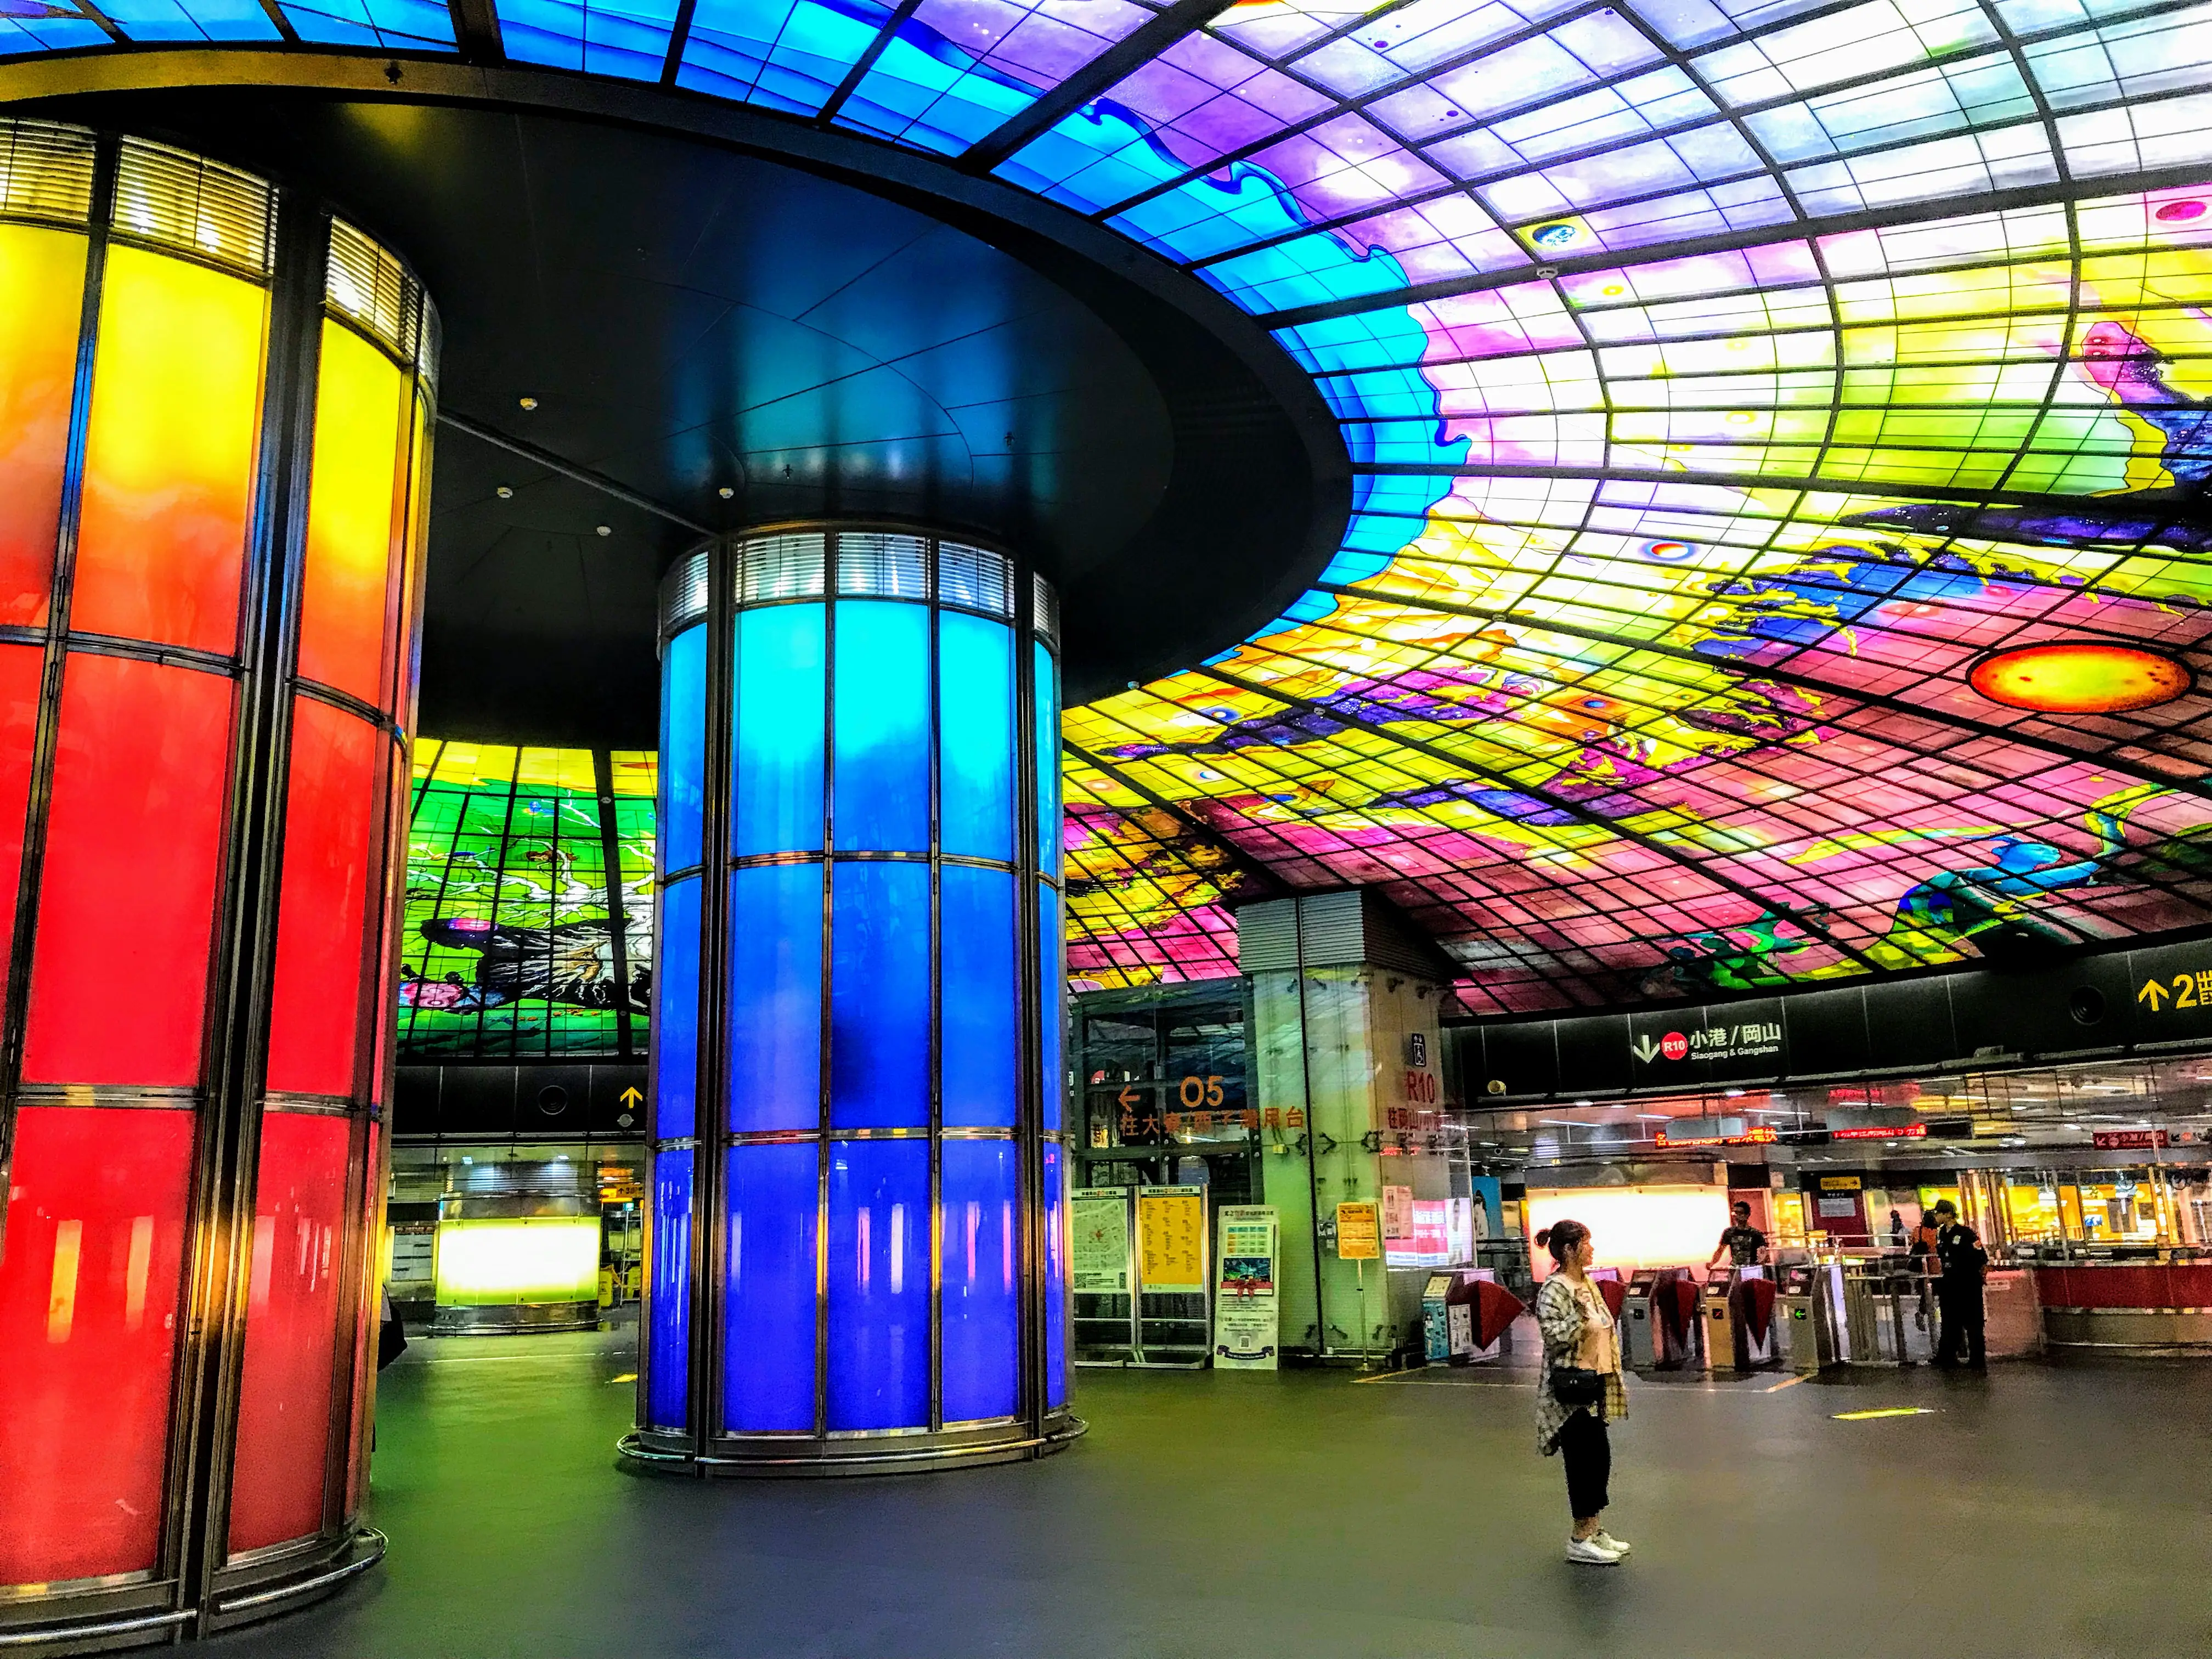 Formosa Boulevard metro station, Kaohsiung, Taiwan